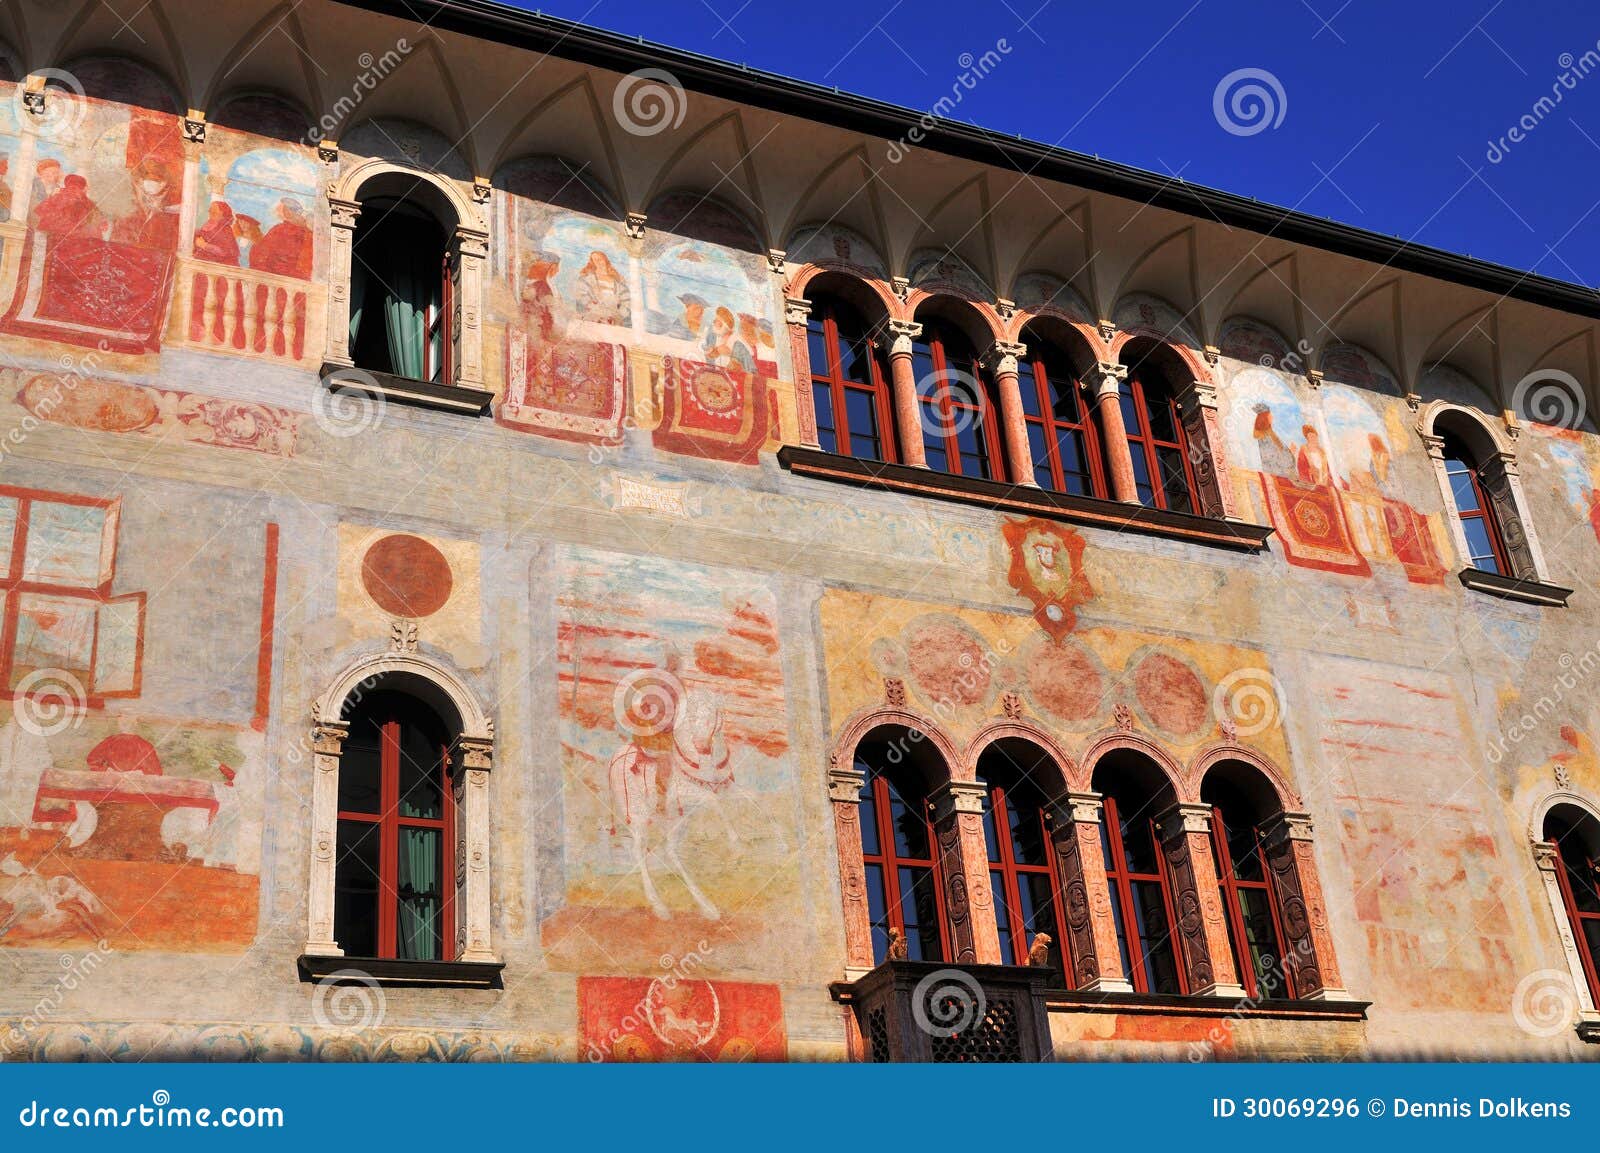 houses with frescoes, trento, italy.